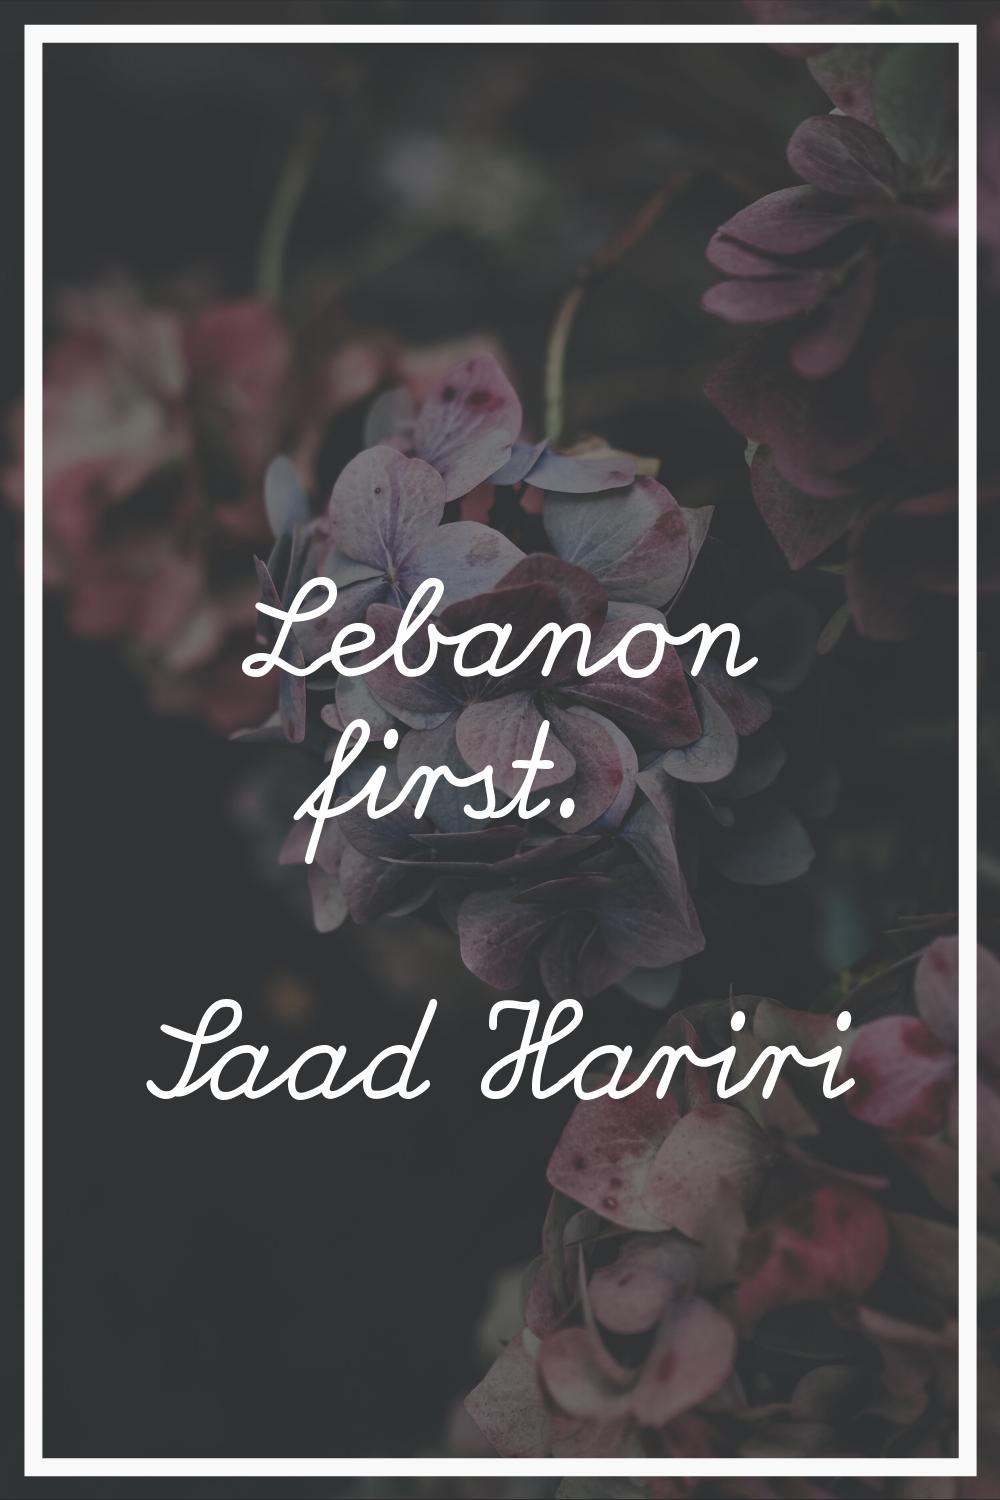 Lebanon first.